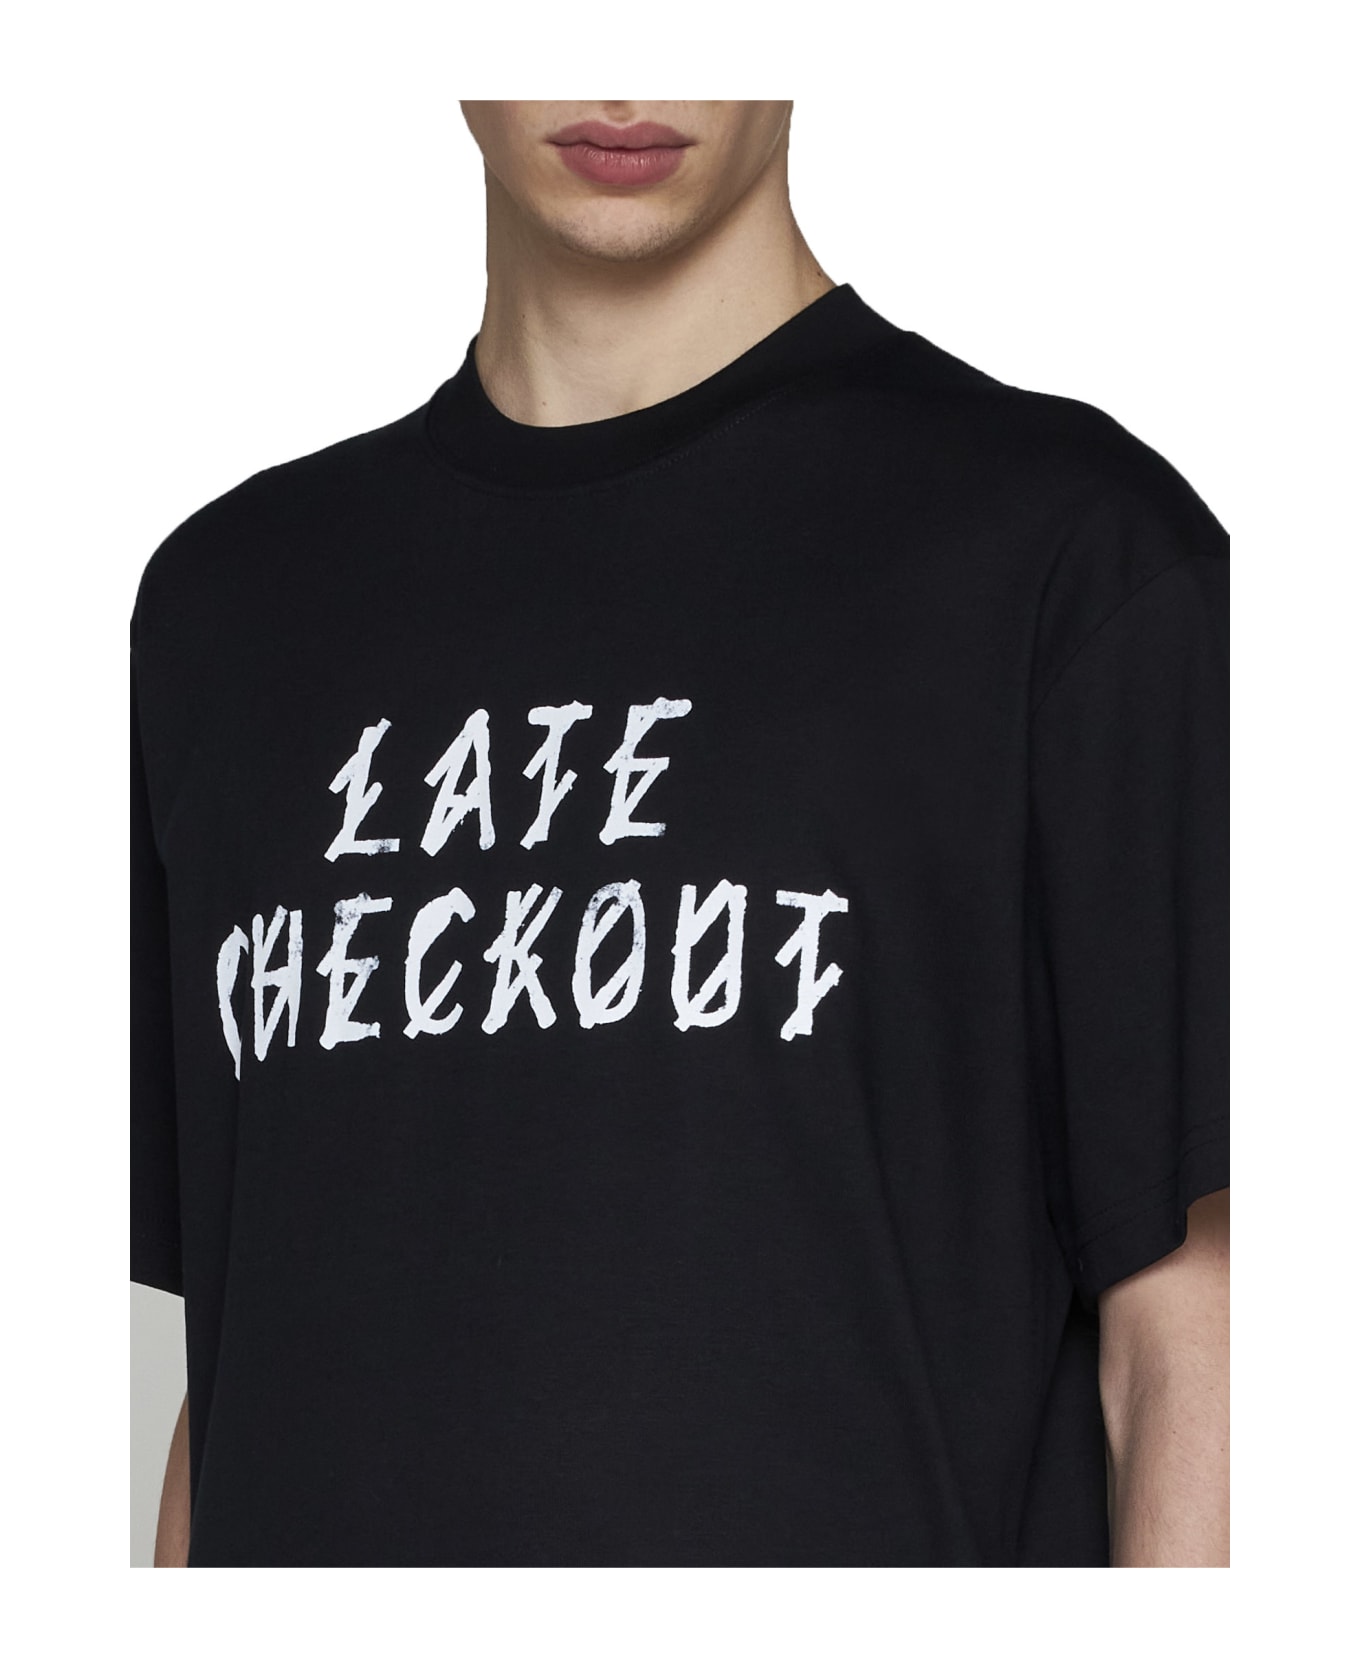 44 Label Group T-Shirt - Balck+late checkout シャツ